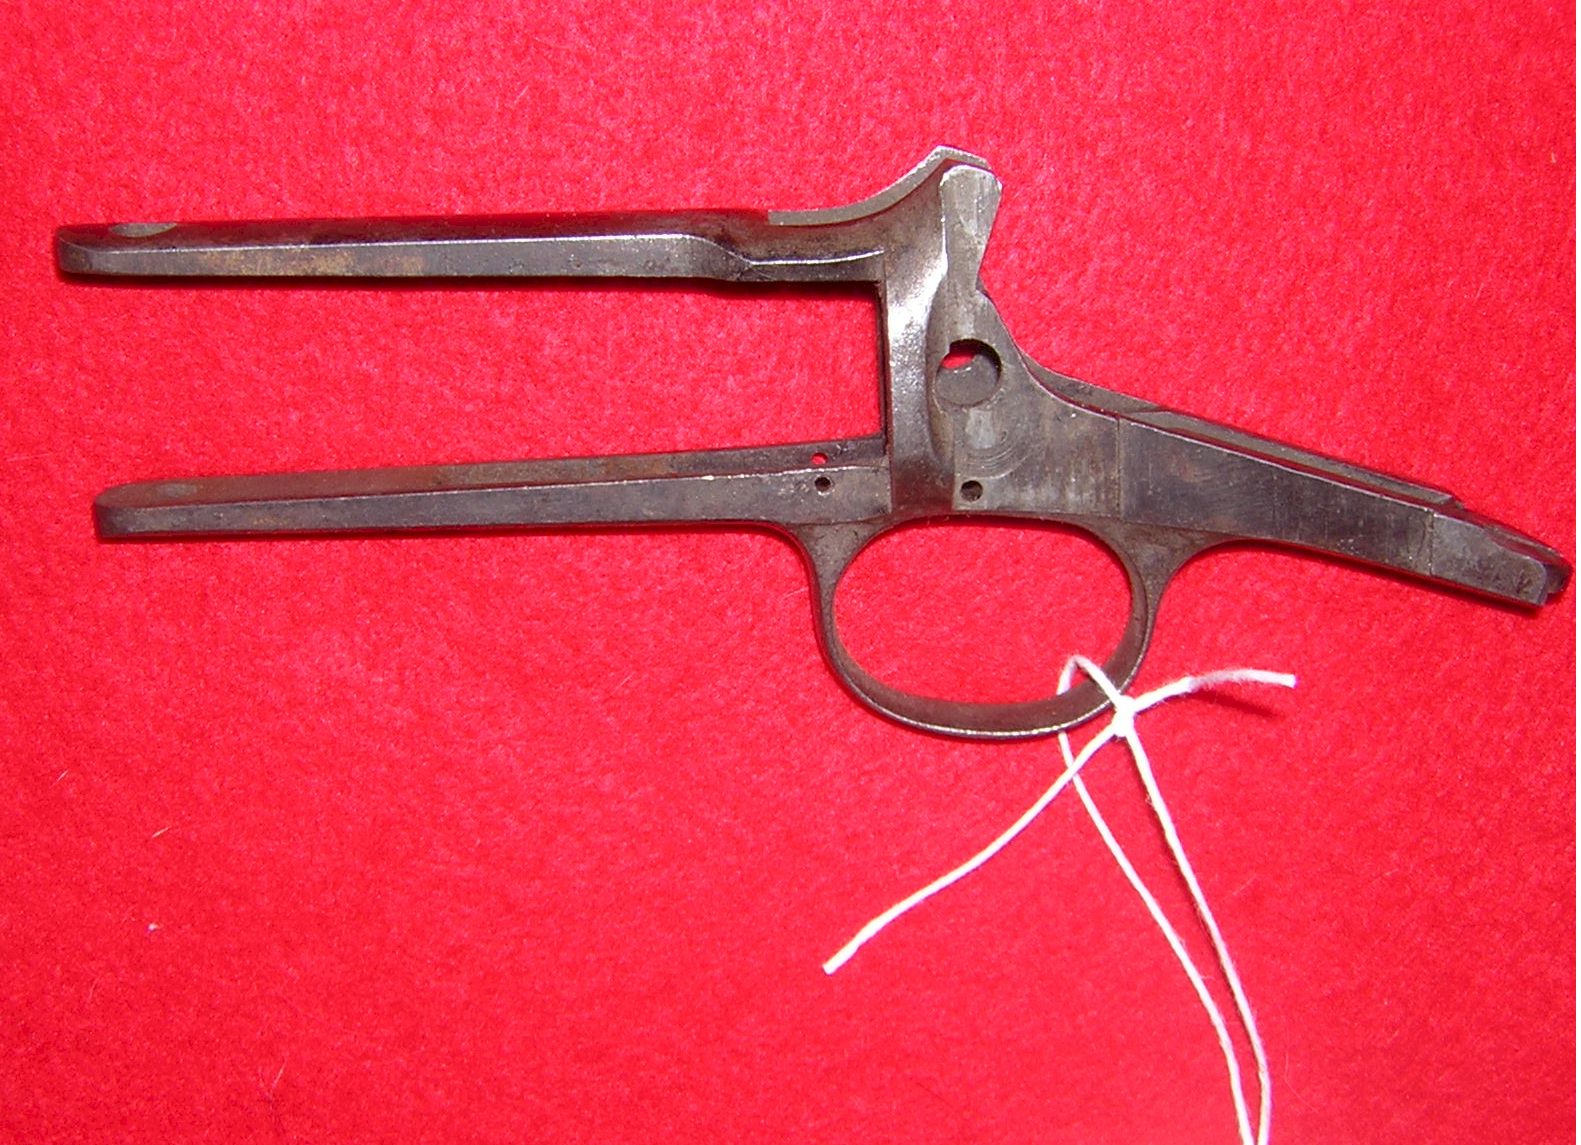 Receiver REAR (trigger guard) Winchester 62A